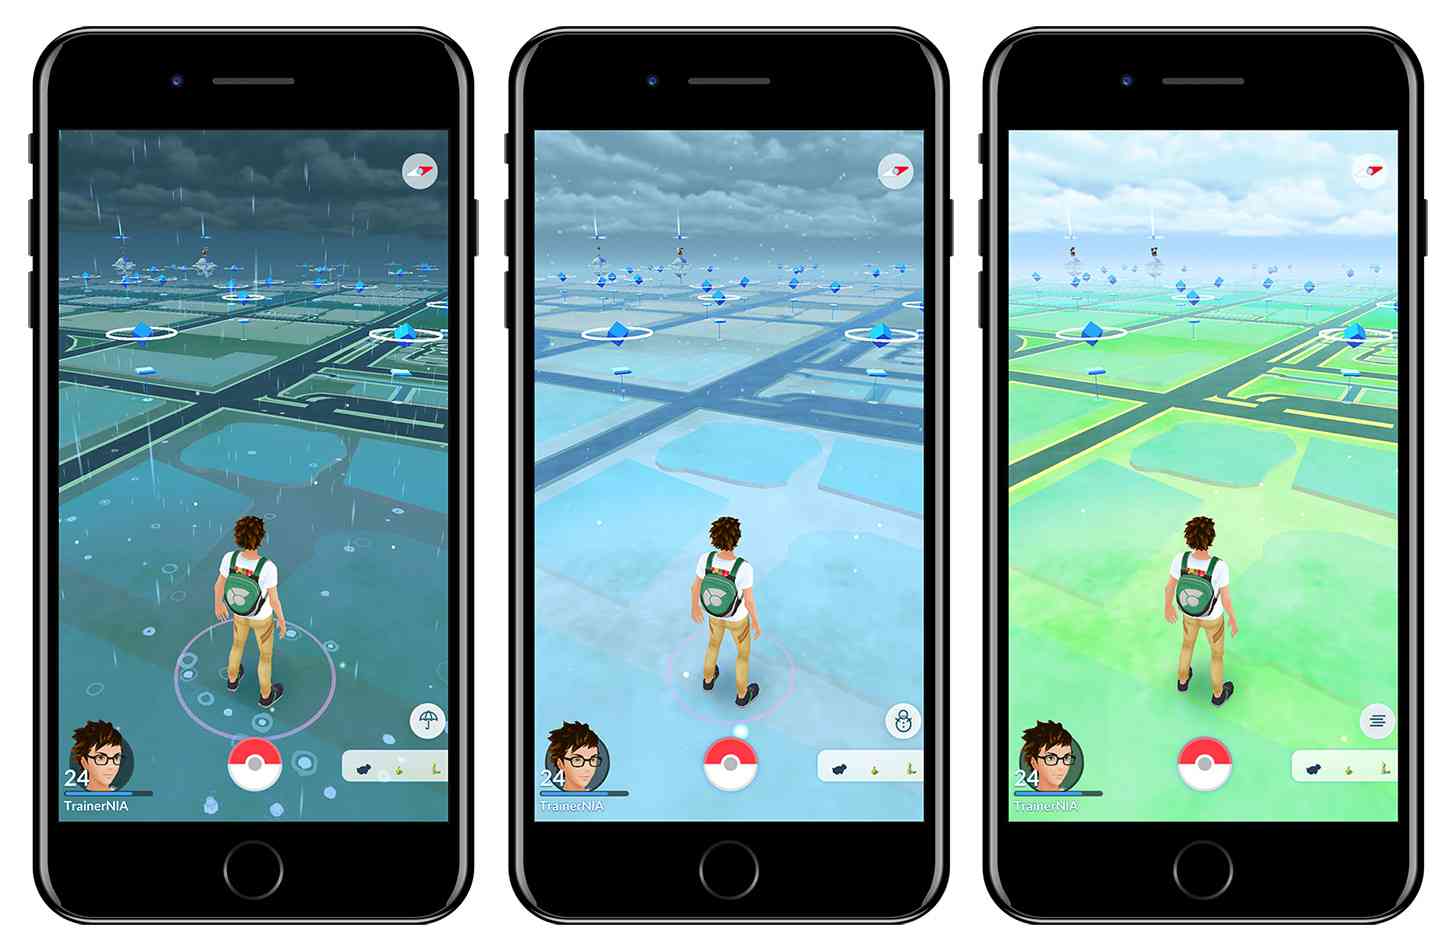 Pokémon Go real-world weather effects